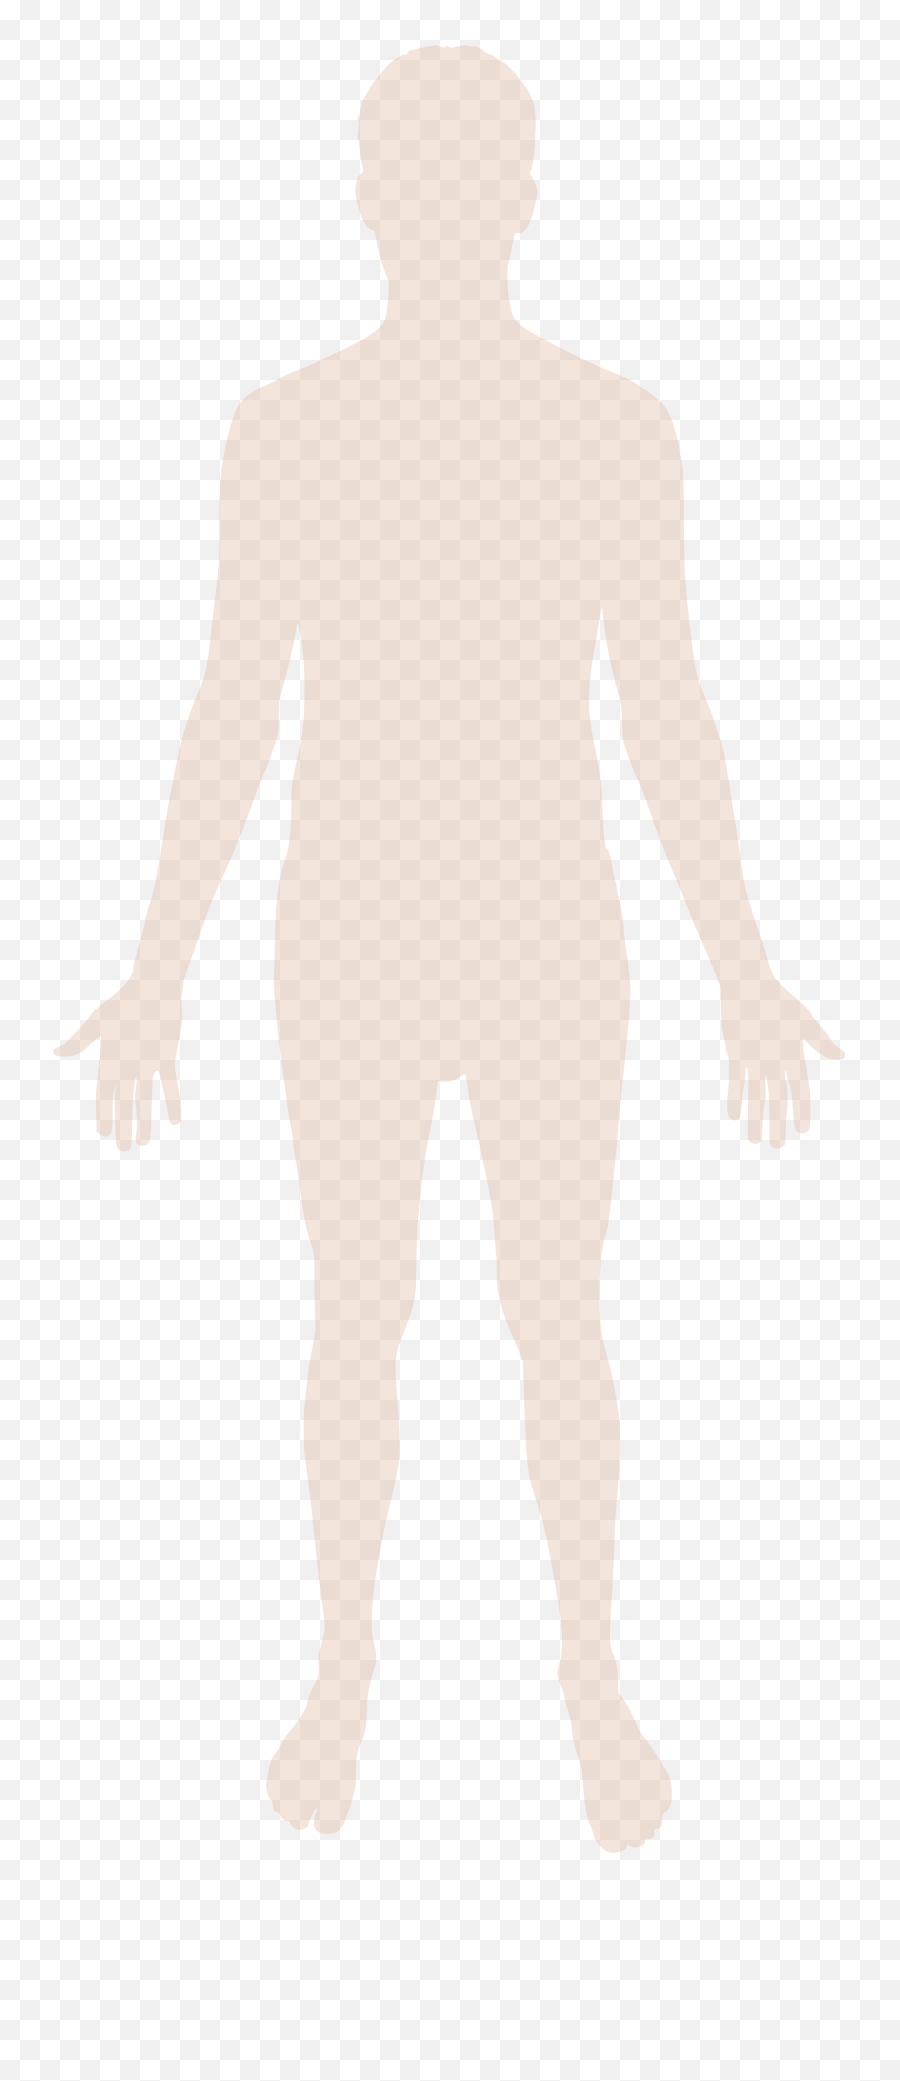 Human Figure Transparent Png Clipart Human Body Outline Svg Free Transparent Png Images Pngaaa Com